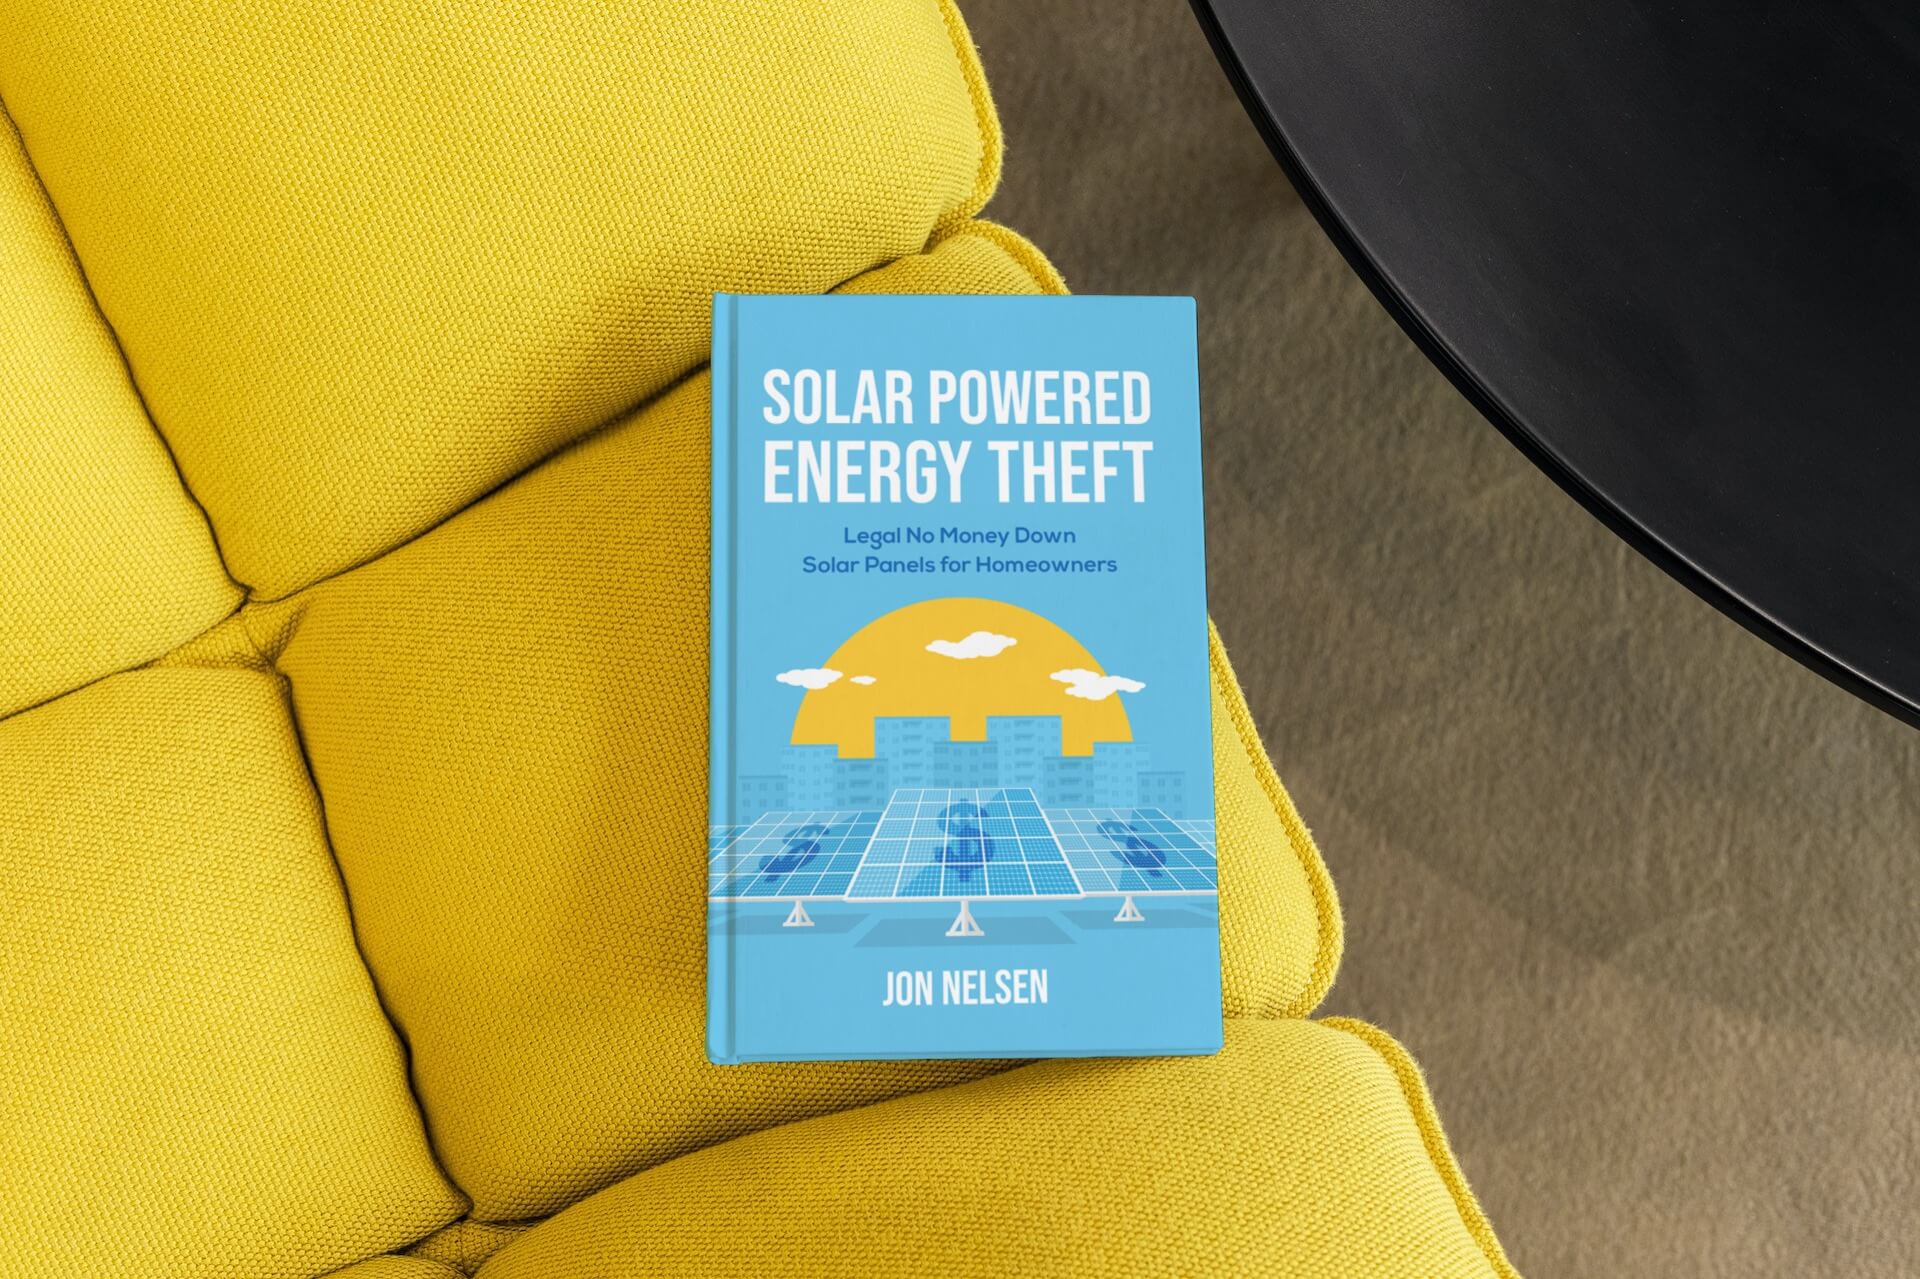 Free copy of solar powered energy theft